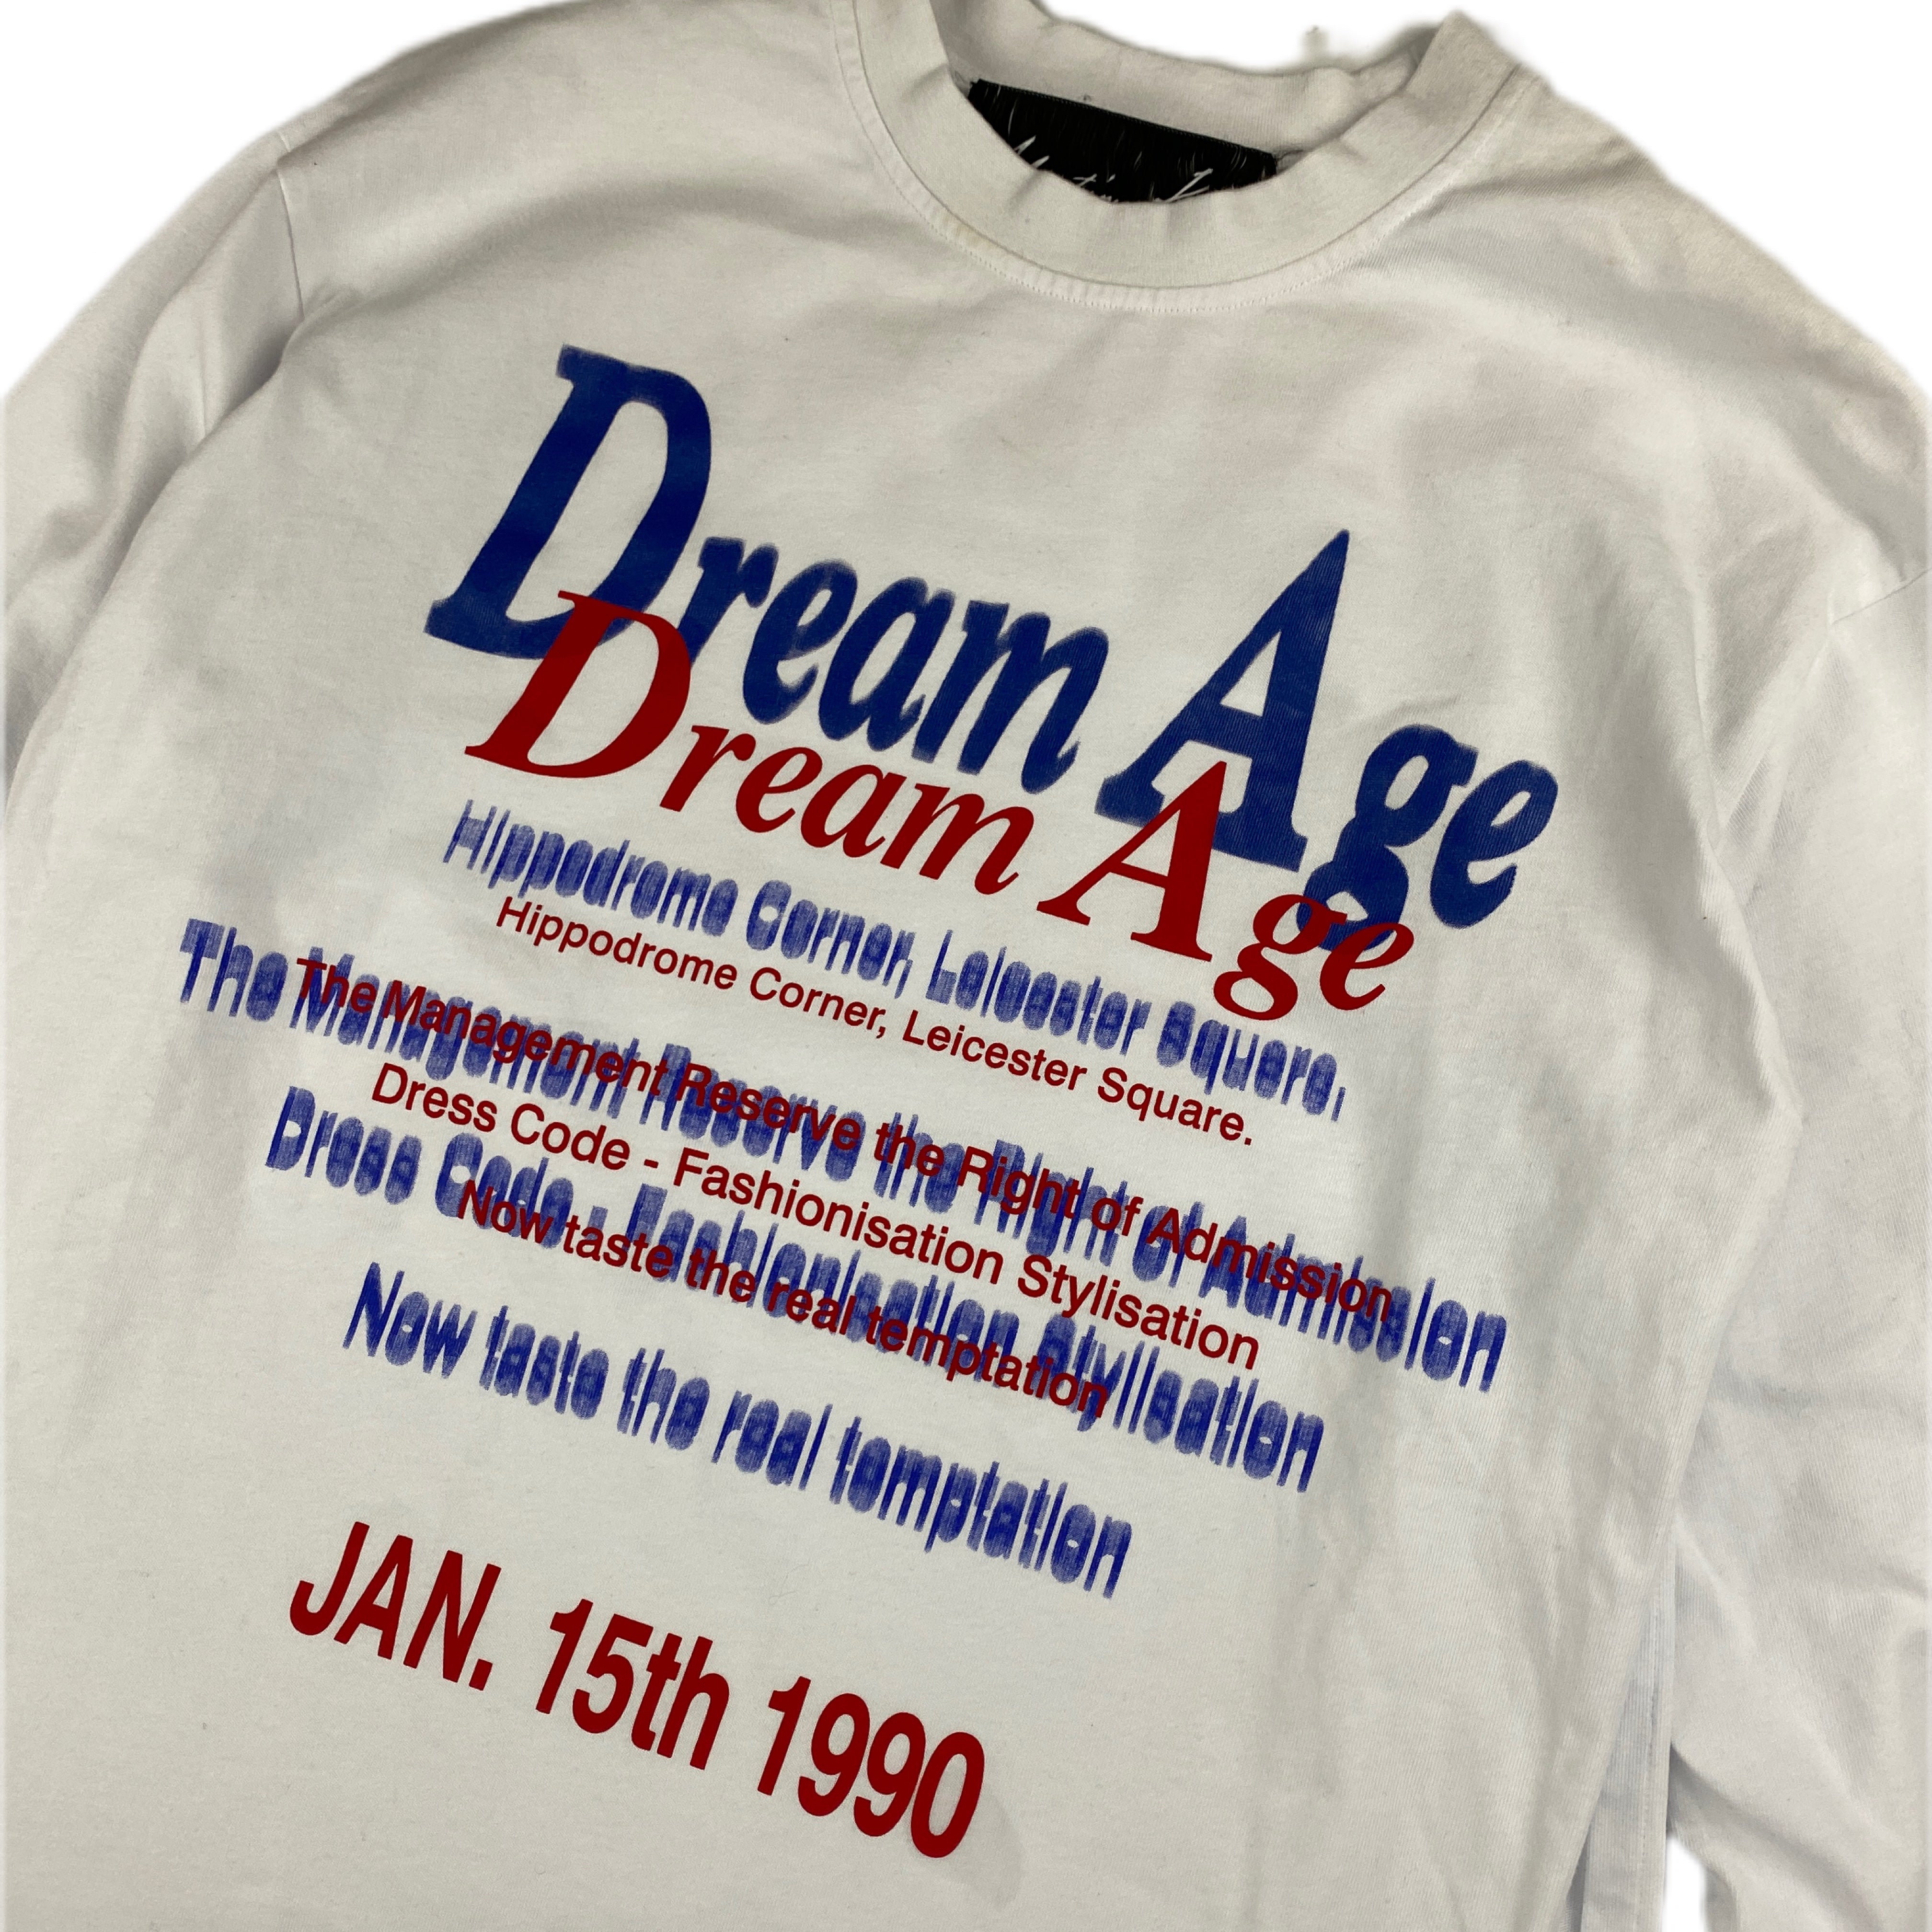 Dream Age print cotton t shirt, Martine Rose